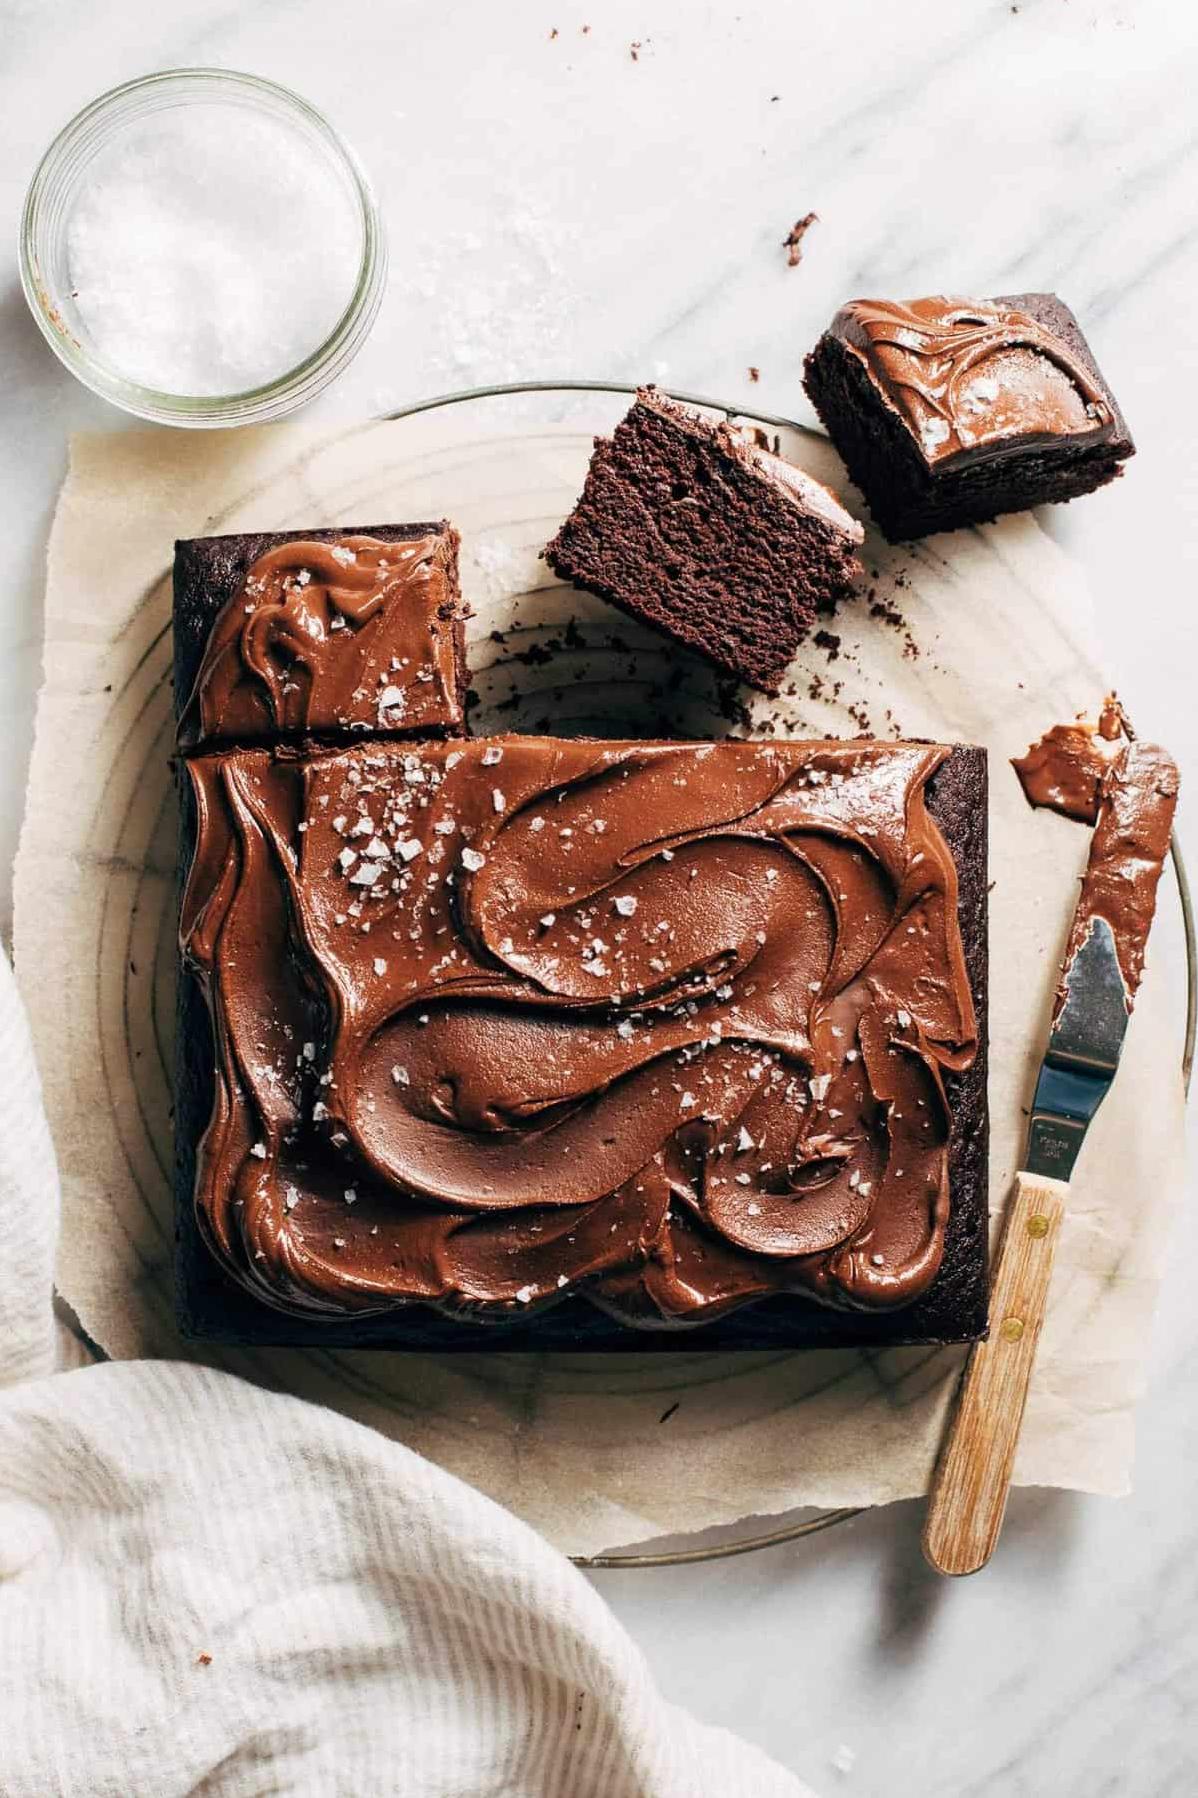  Chocolatey goodness in every bite